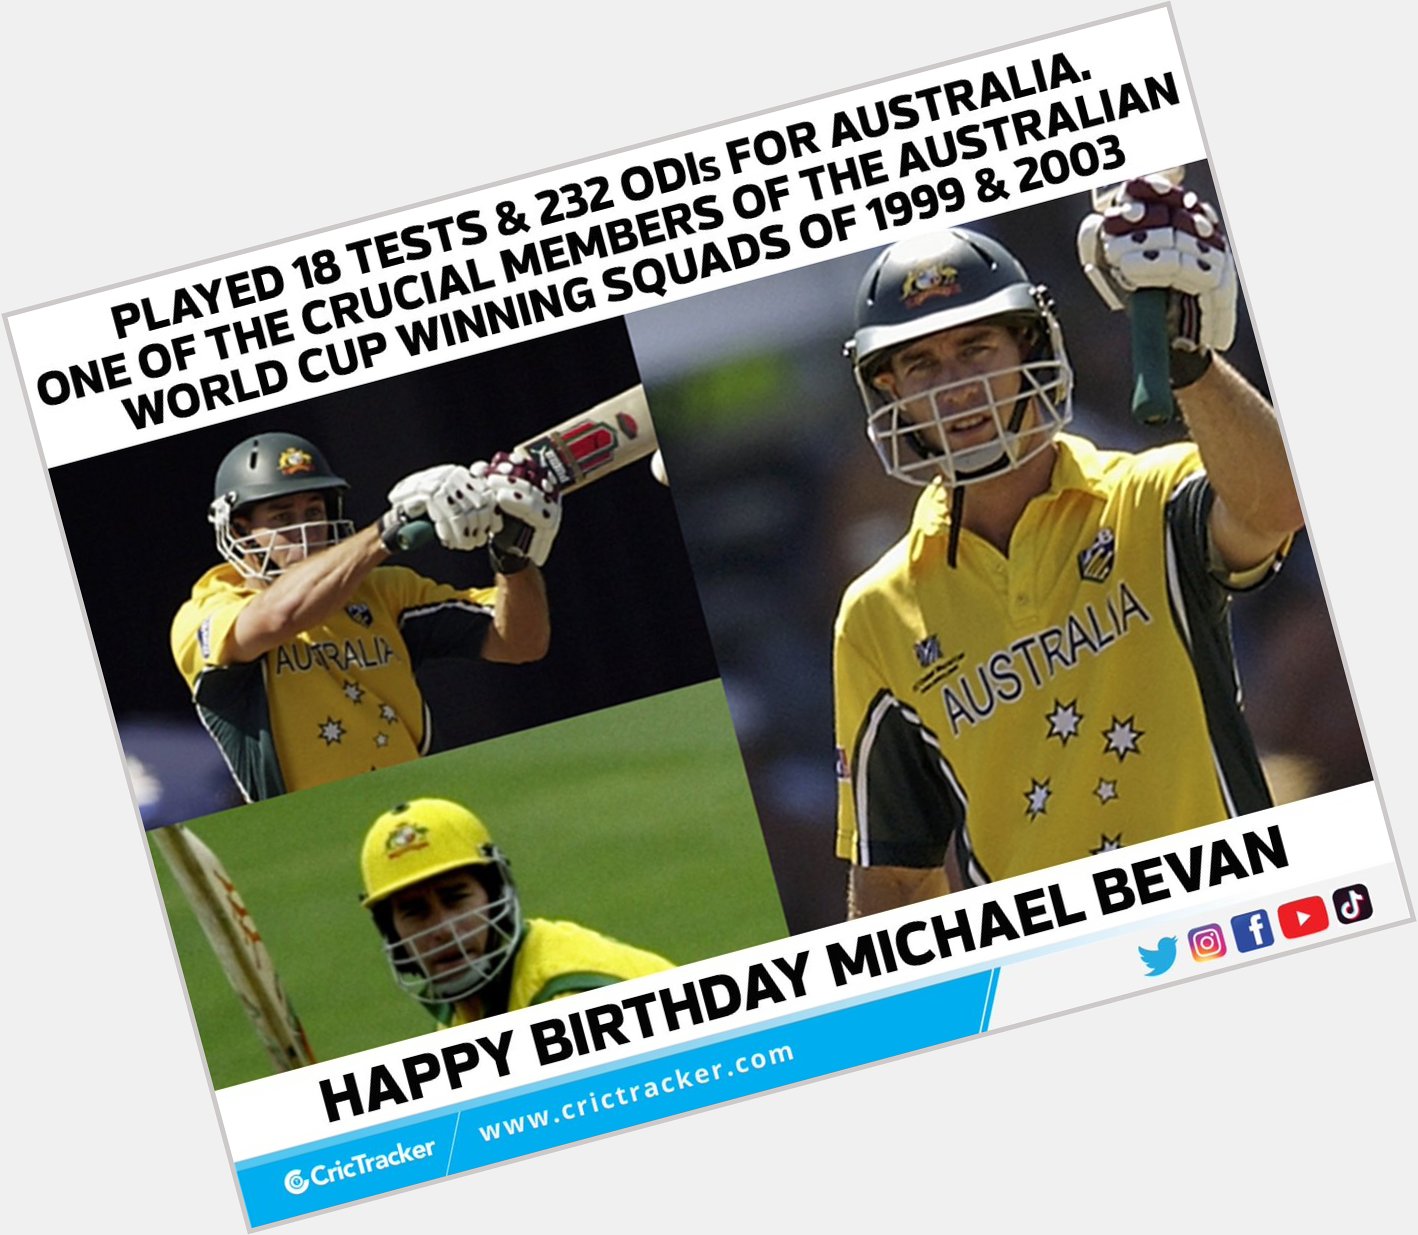 Wishing Michael Bevan a very happy birthday.     